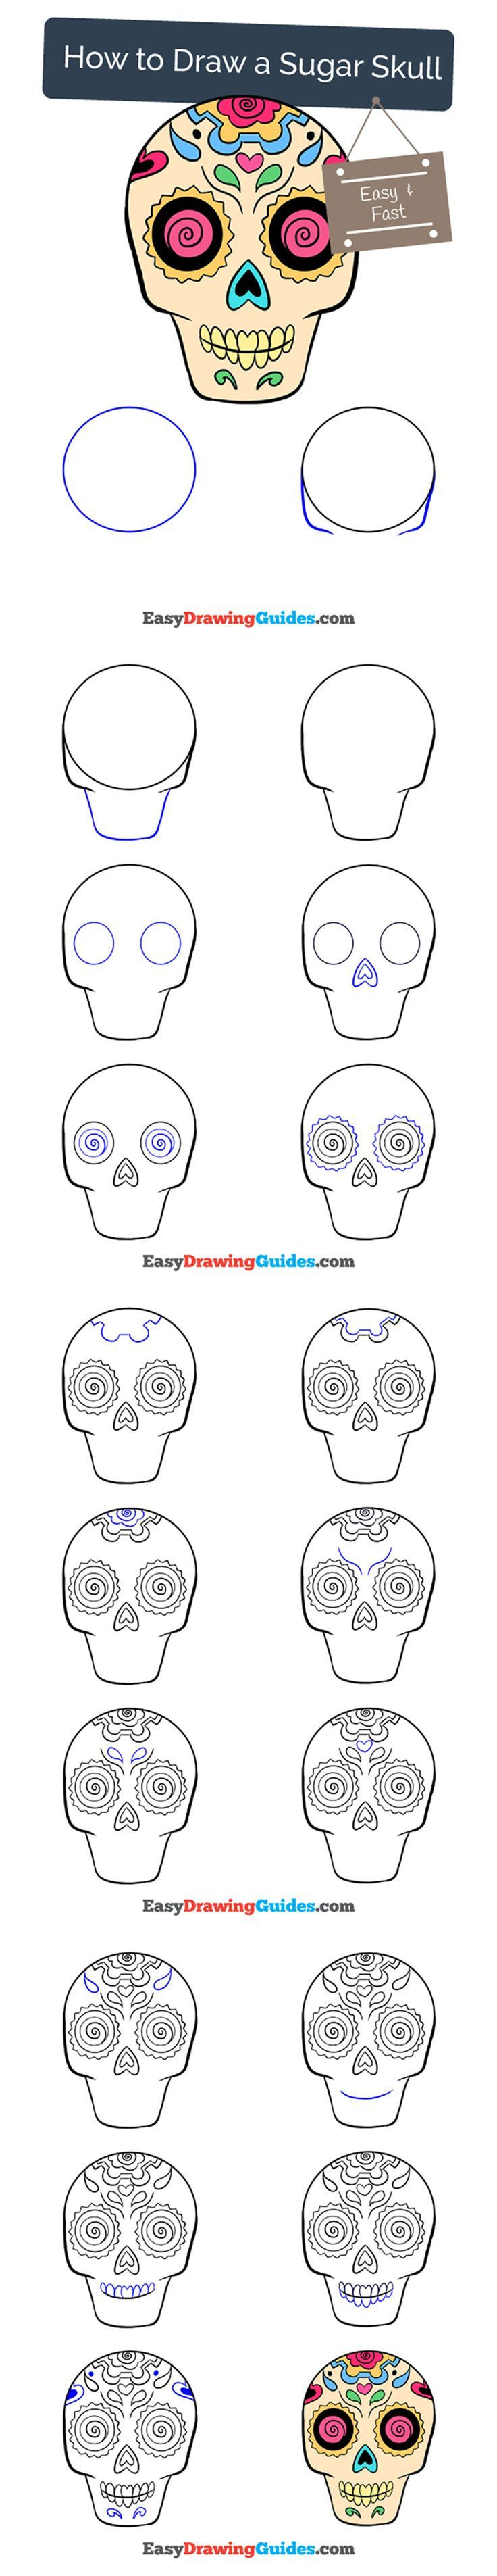 Sugar Skull Drawing Step By Step at PaintingValley.com | Explore